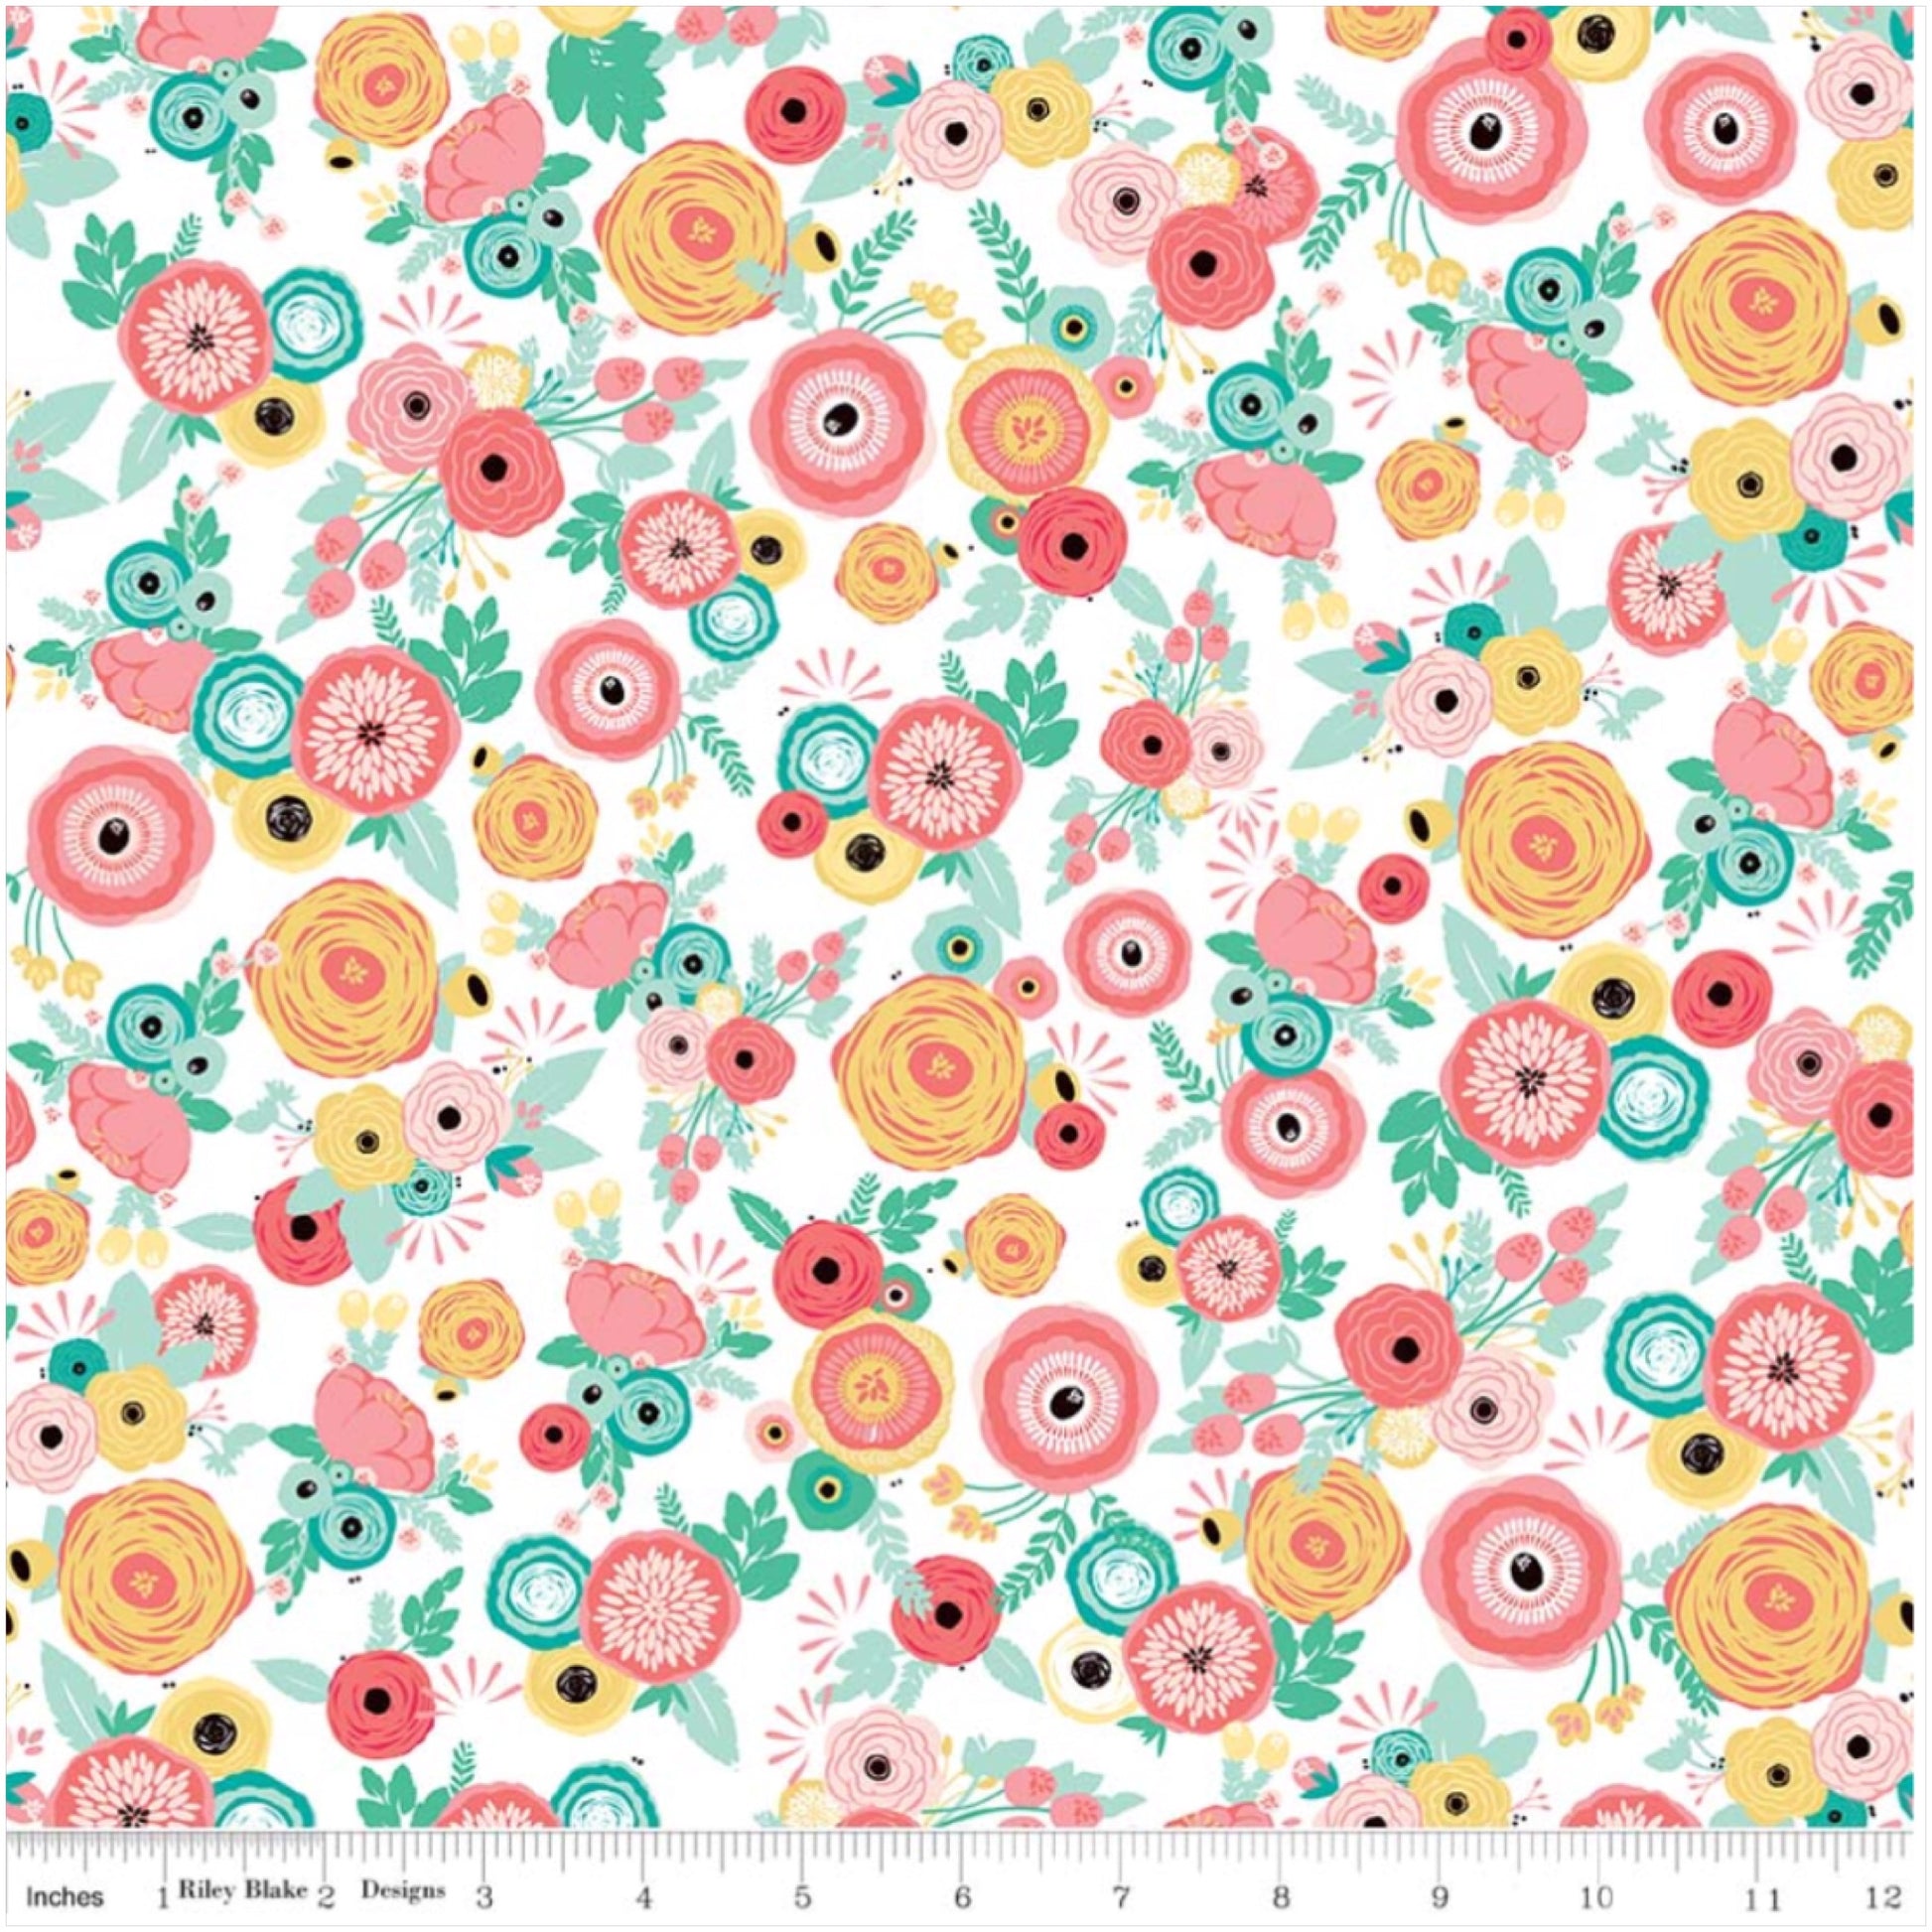 White Just Sayin' Floral Bloom - My Mind's Eye By Riley Blake - 100% Cotton Fabric - Rosie's Craft Shop Ltd